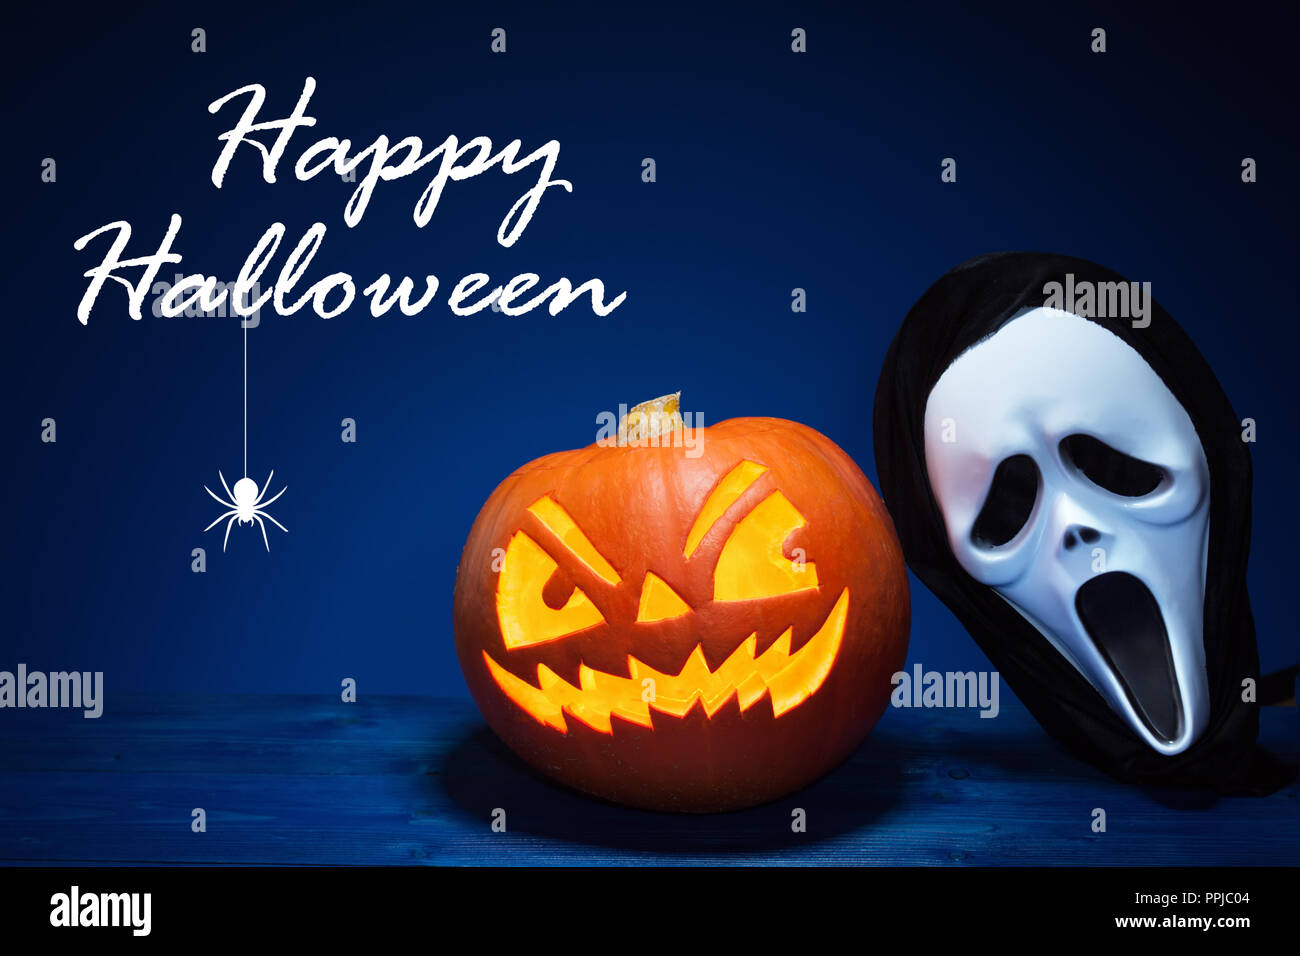 Halloween calabaza y máscara de texto sobre fondo azul oscuro. Foto de stock